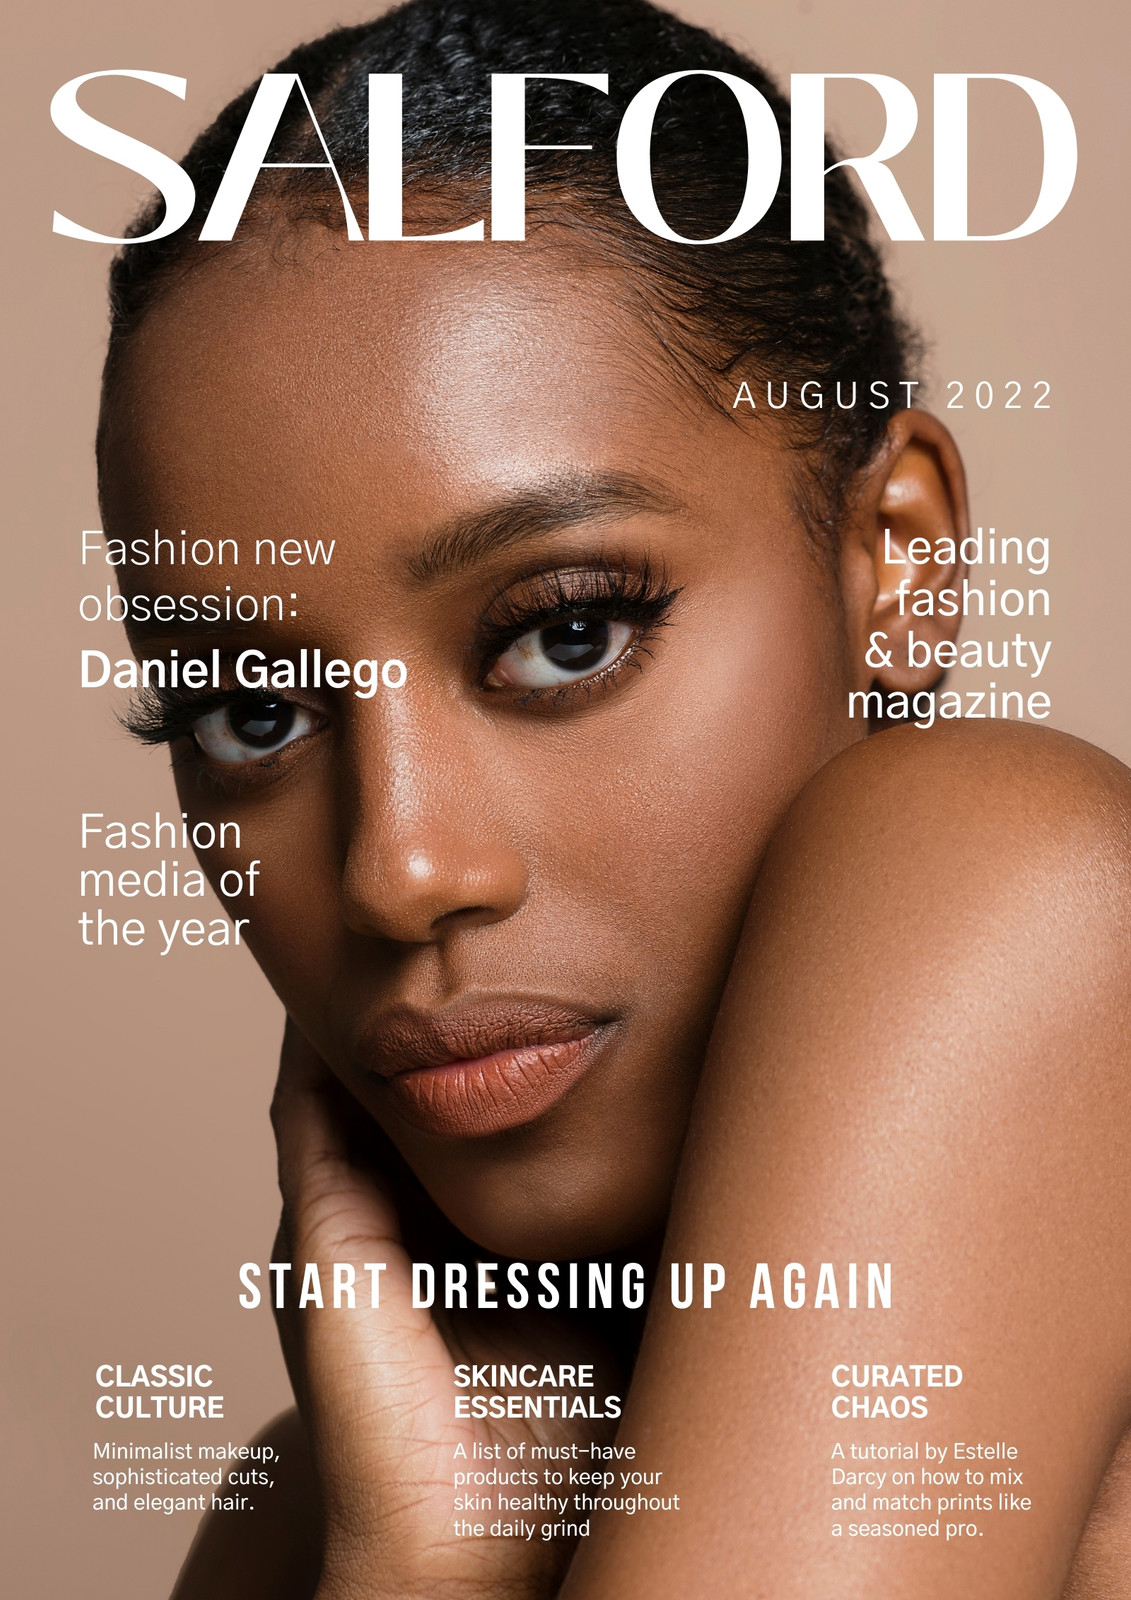 Free beautiful magazine covers you can customize